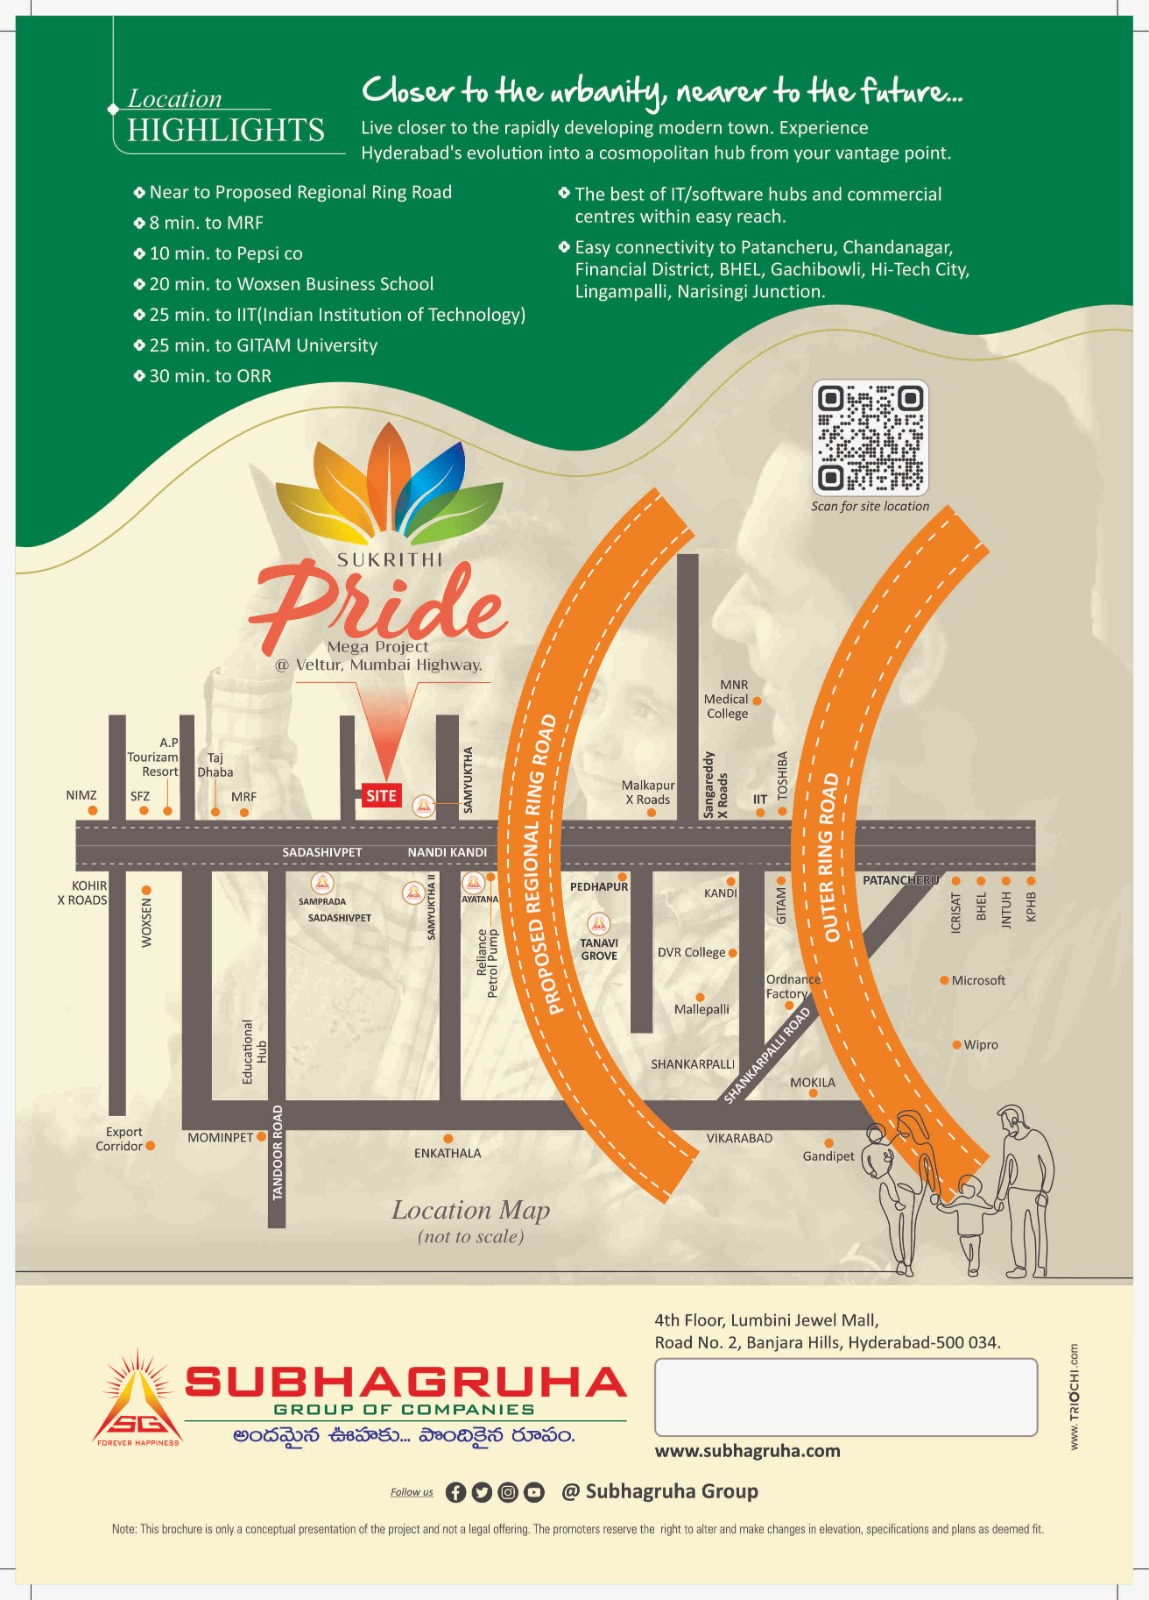 Sukrithi Pride